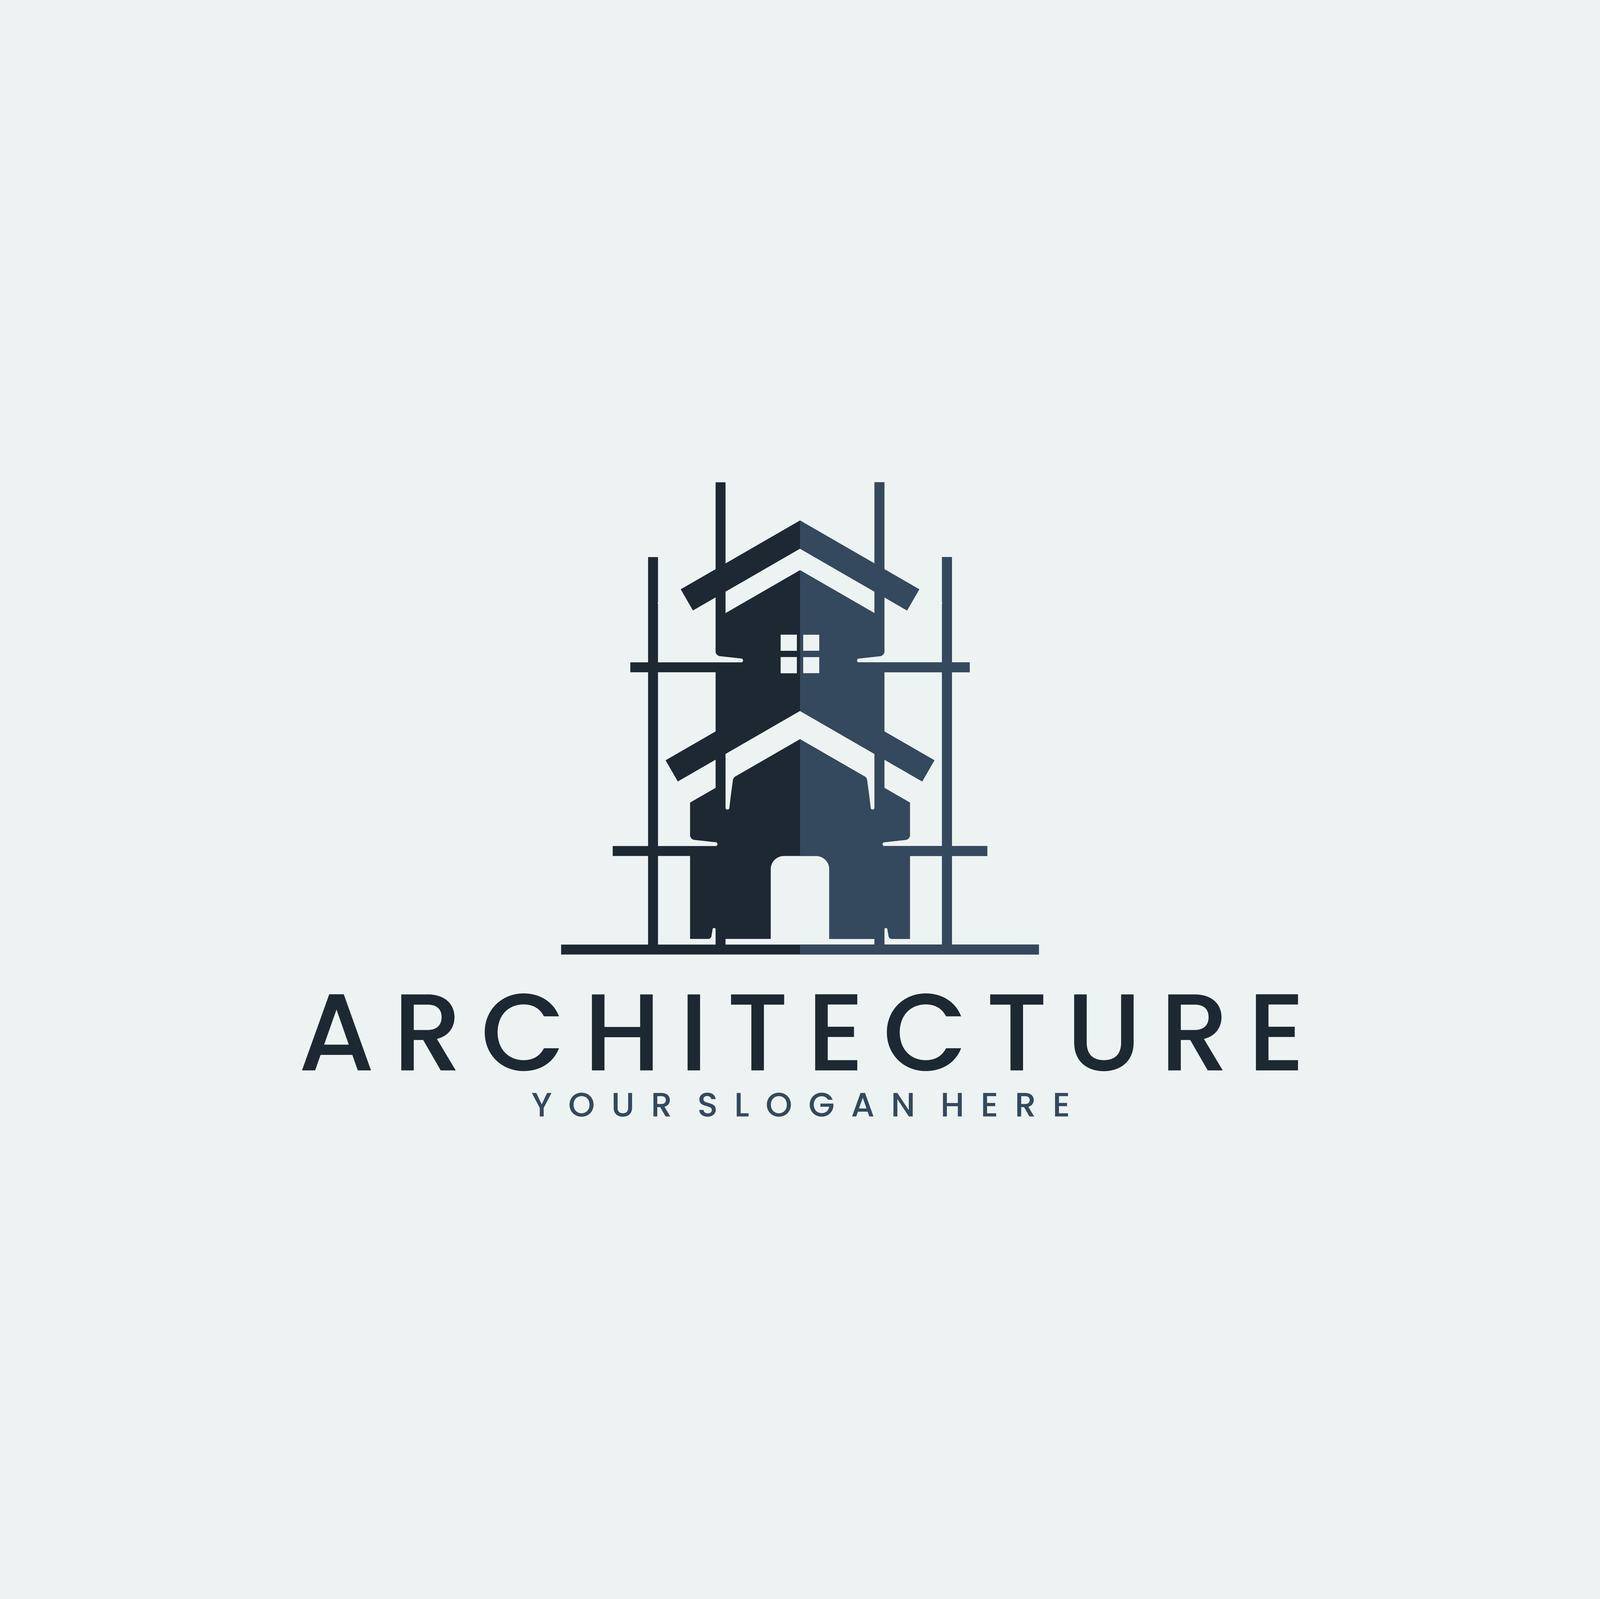 architecture , build , logo design inspiration by jatmikaV